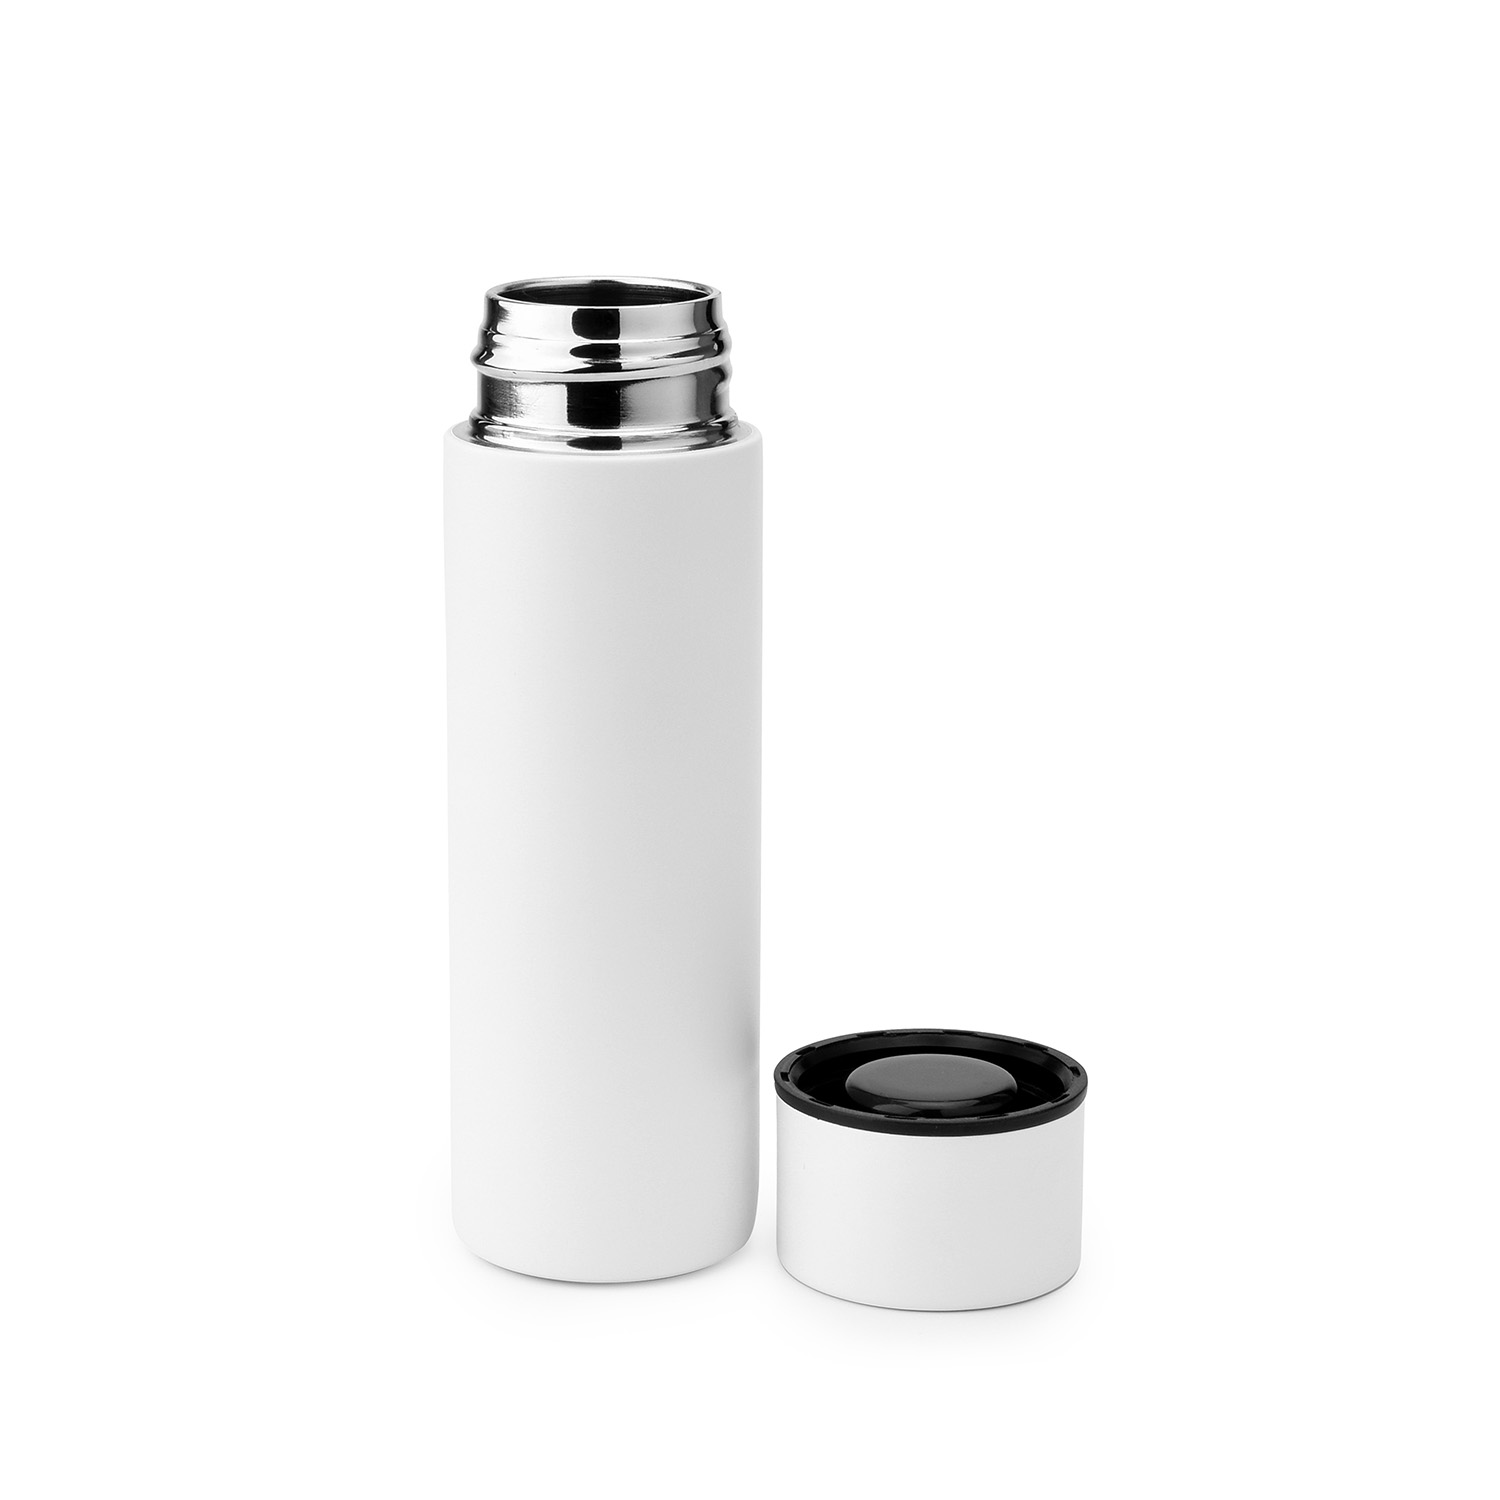 https://www.waterbottle.tech/wp-content/uploads/2019/08/small-capacity-stainless-steel-water-bottle-s11130a3-2.jpg